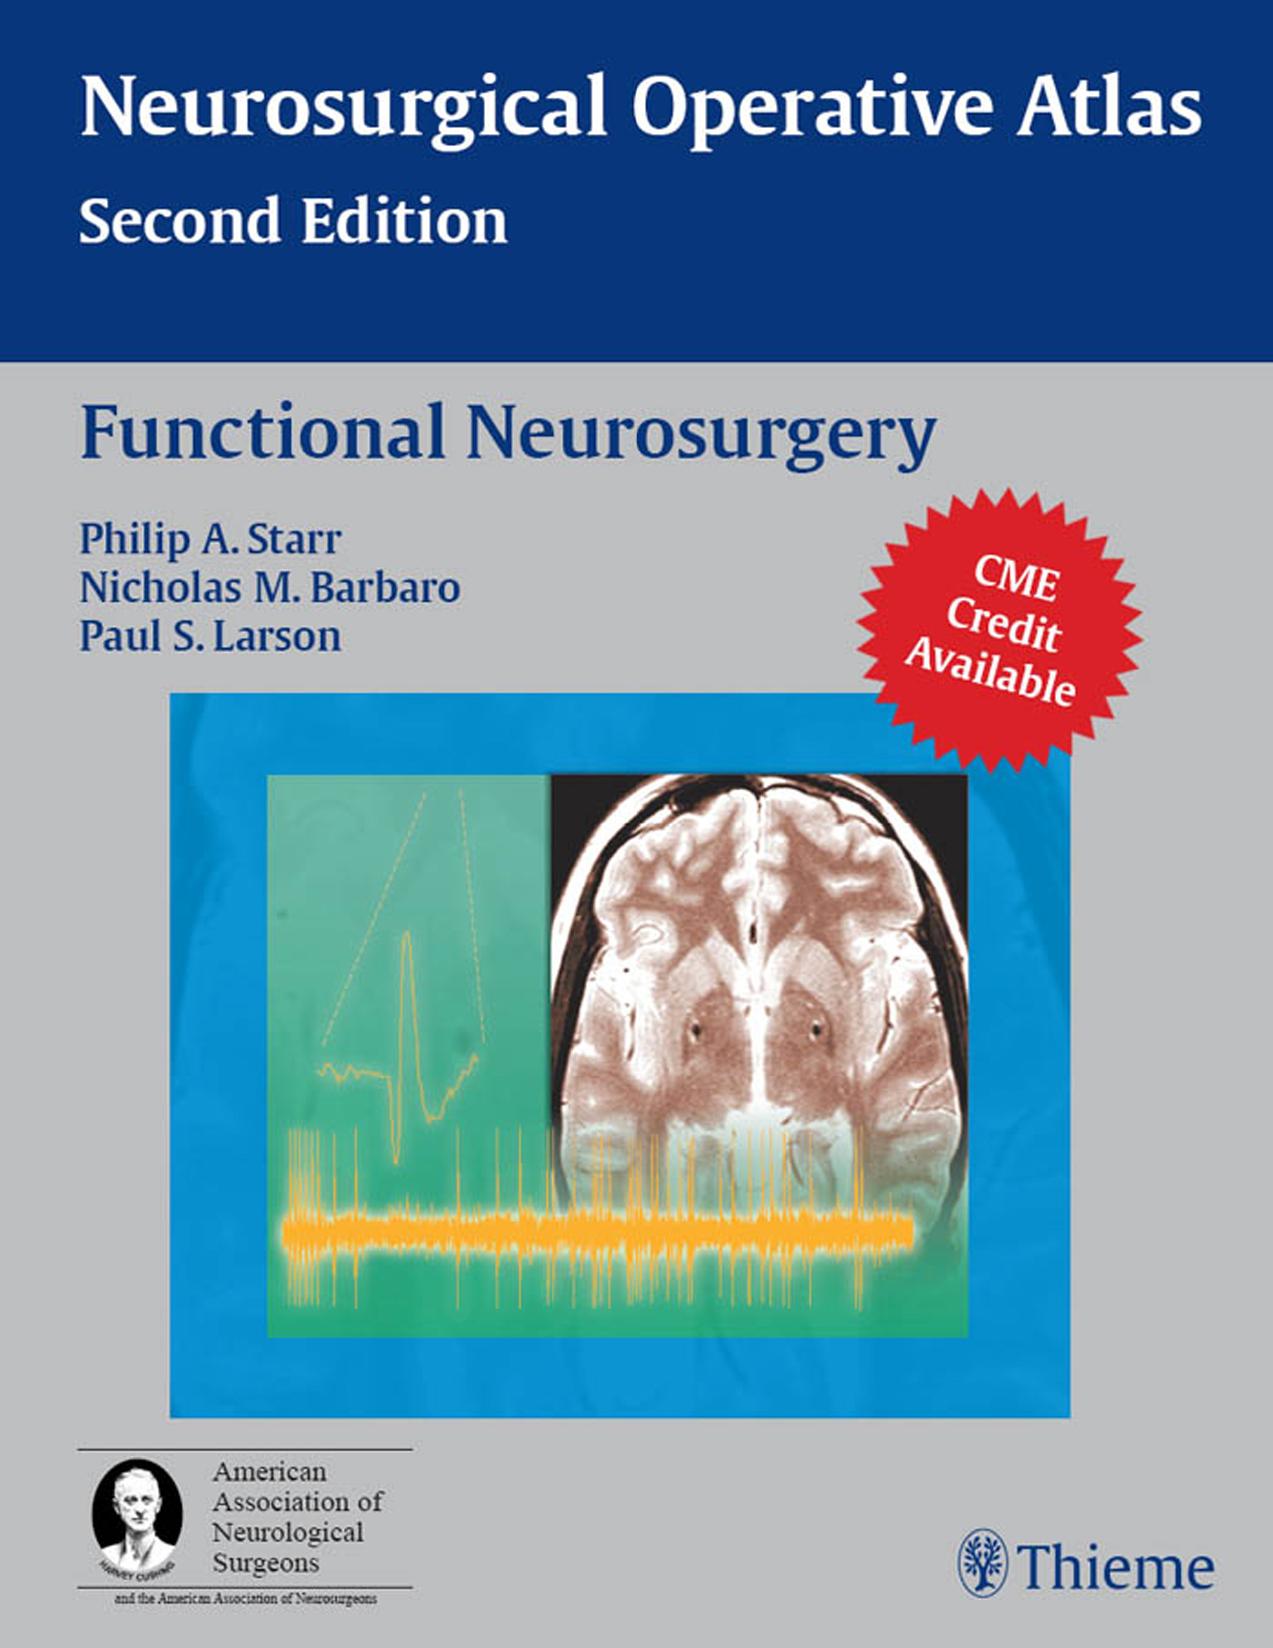 Neurosurgical Operative Atlas